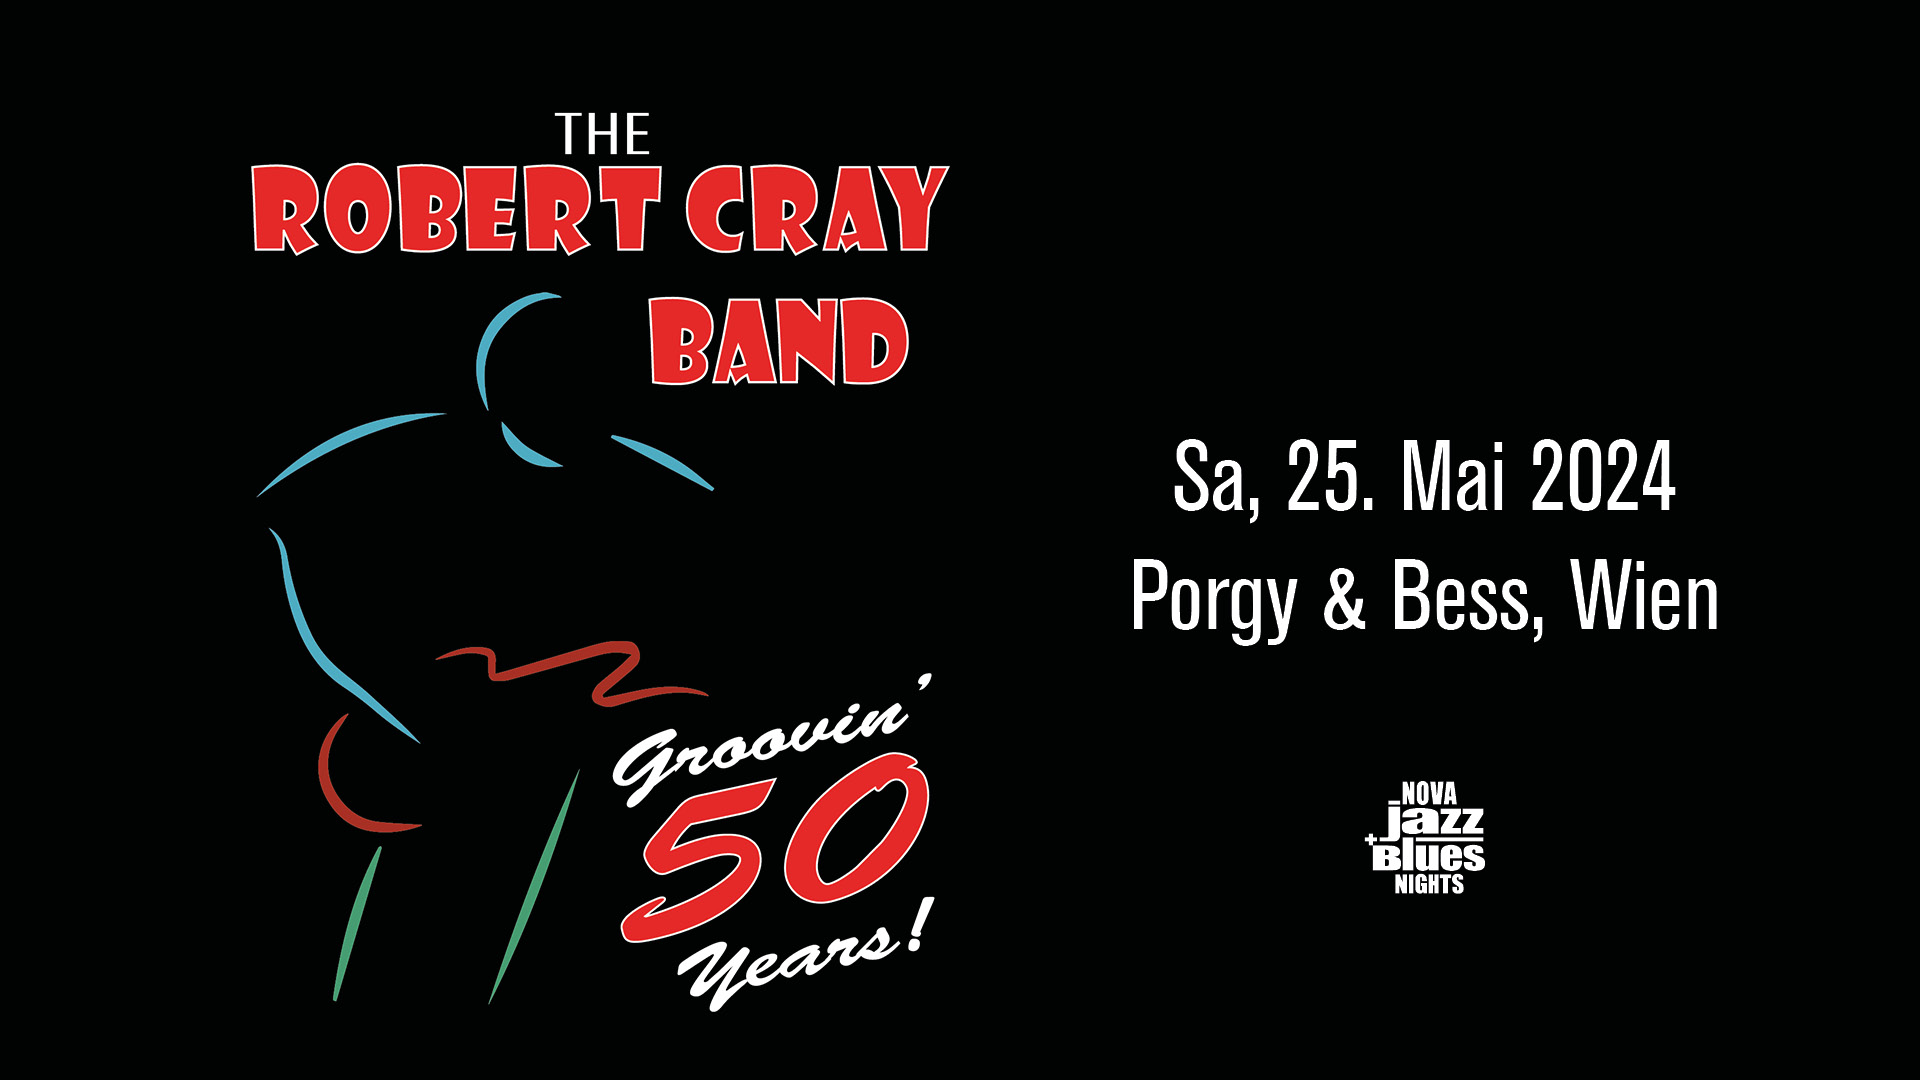 The Robert Cray Band am 25. May 2024 @ Porgy & Bess.